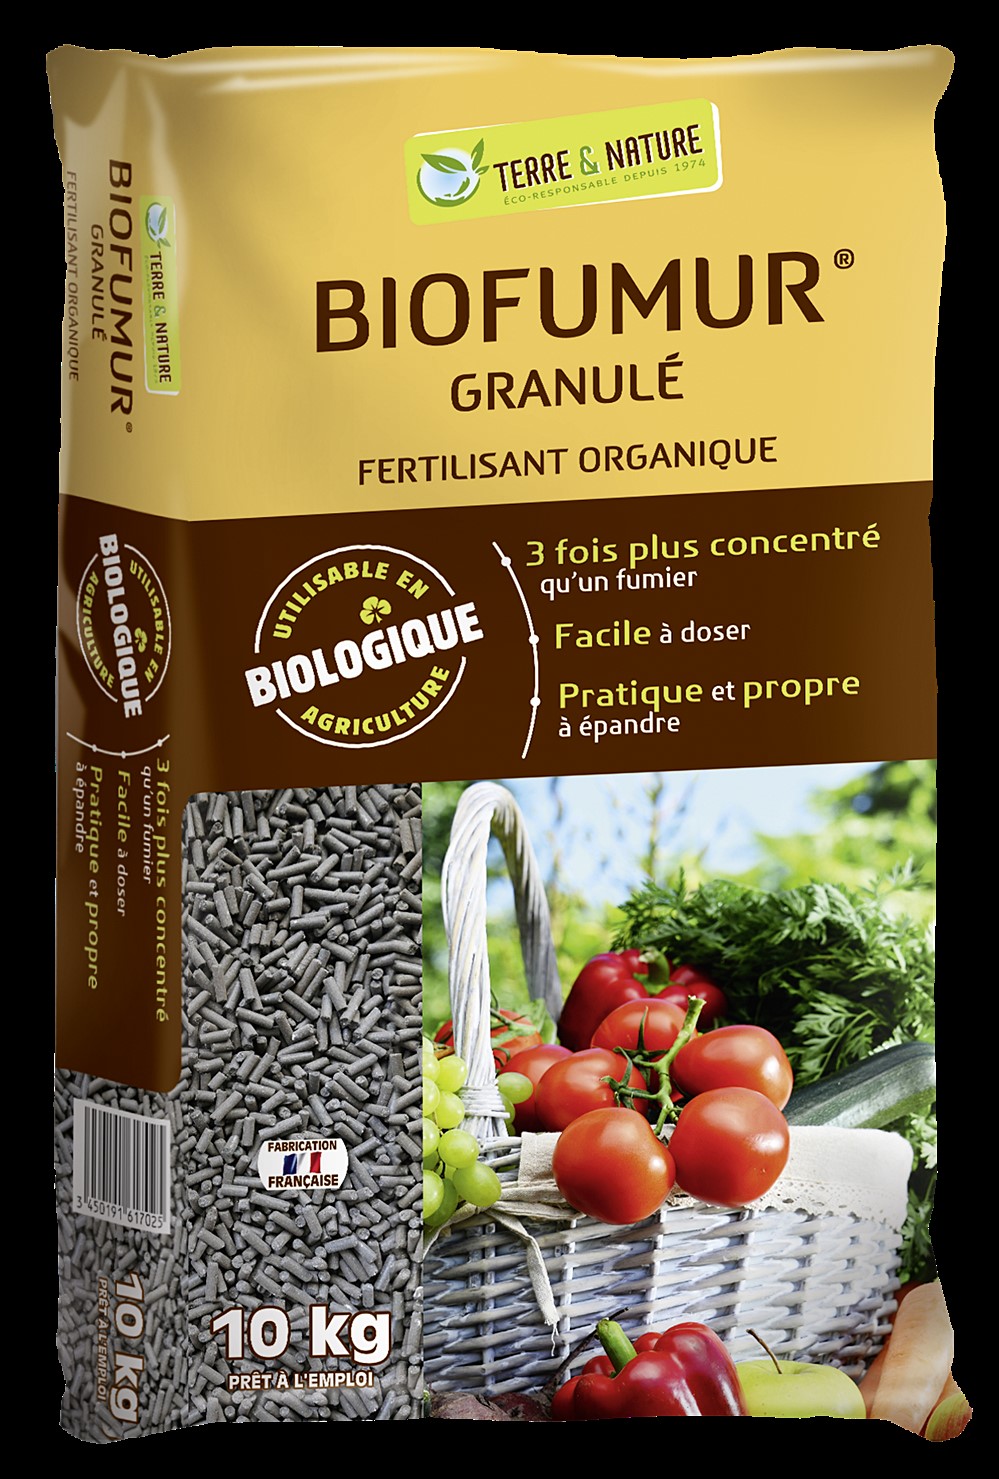 Biofumur Granulé, fertilisant organique